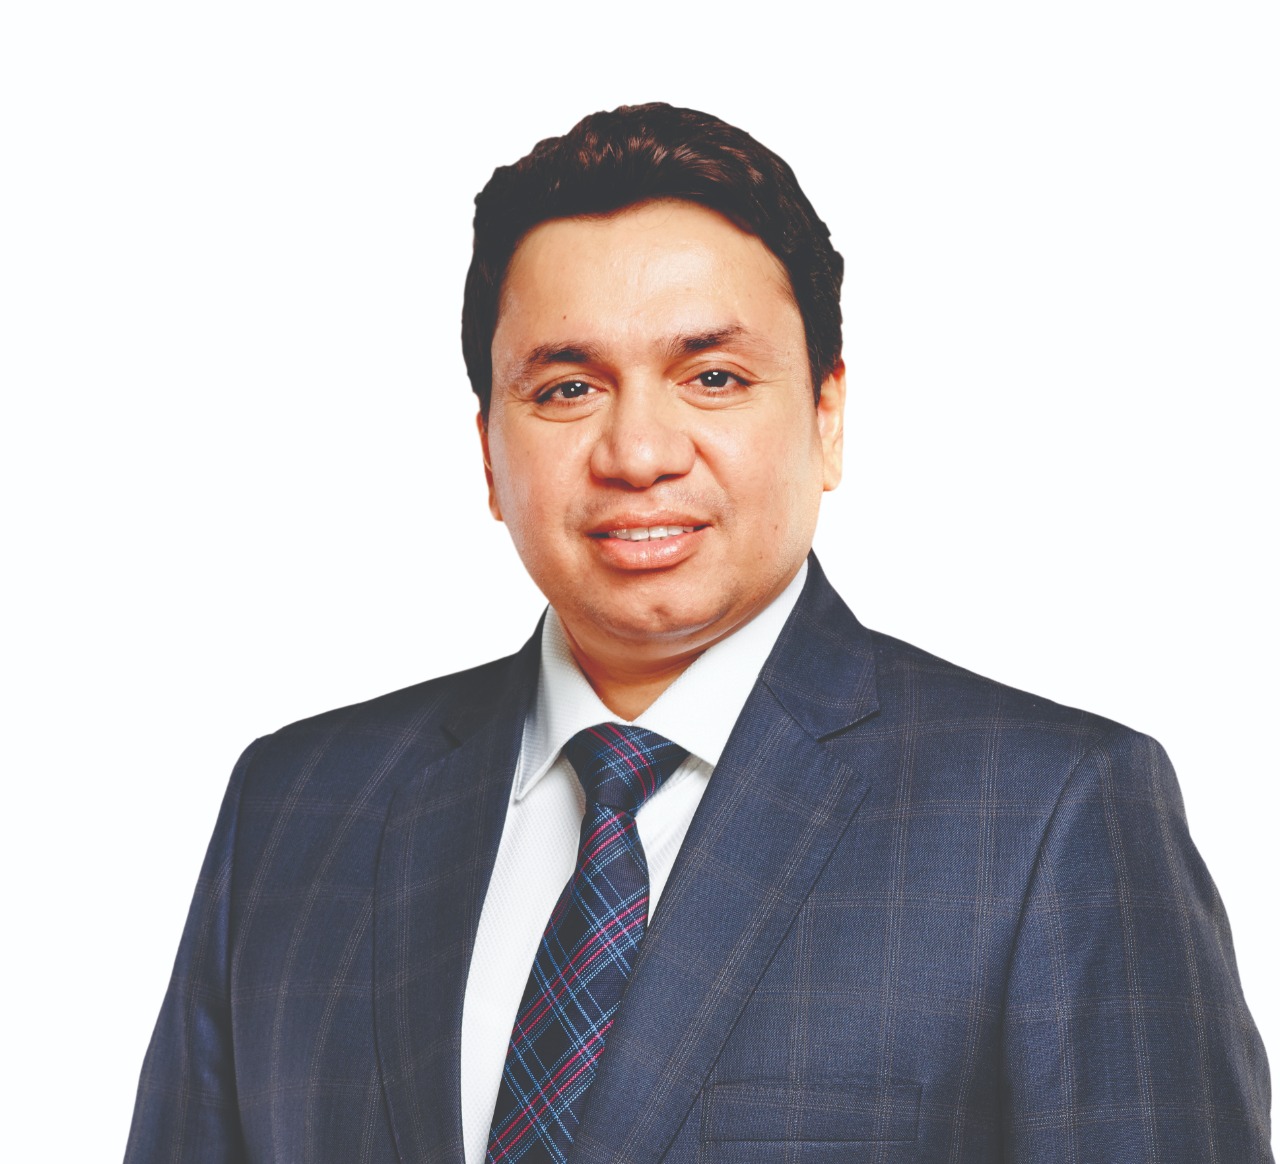 Pradeep Aggarwal, <span>Founder and Chairman of Signature Global Group</span>